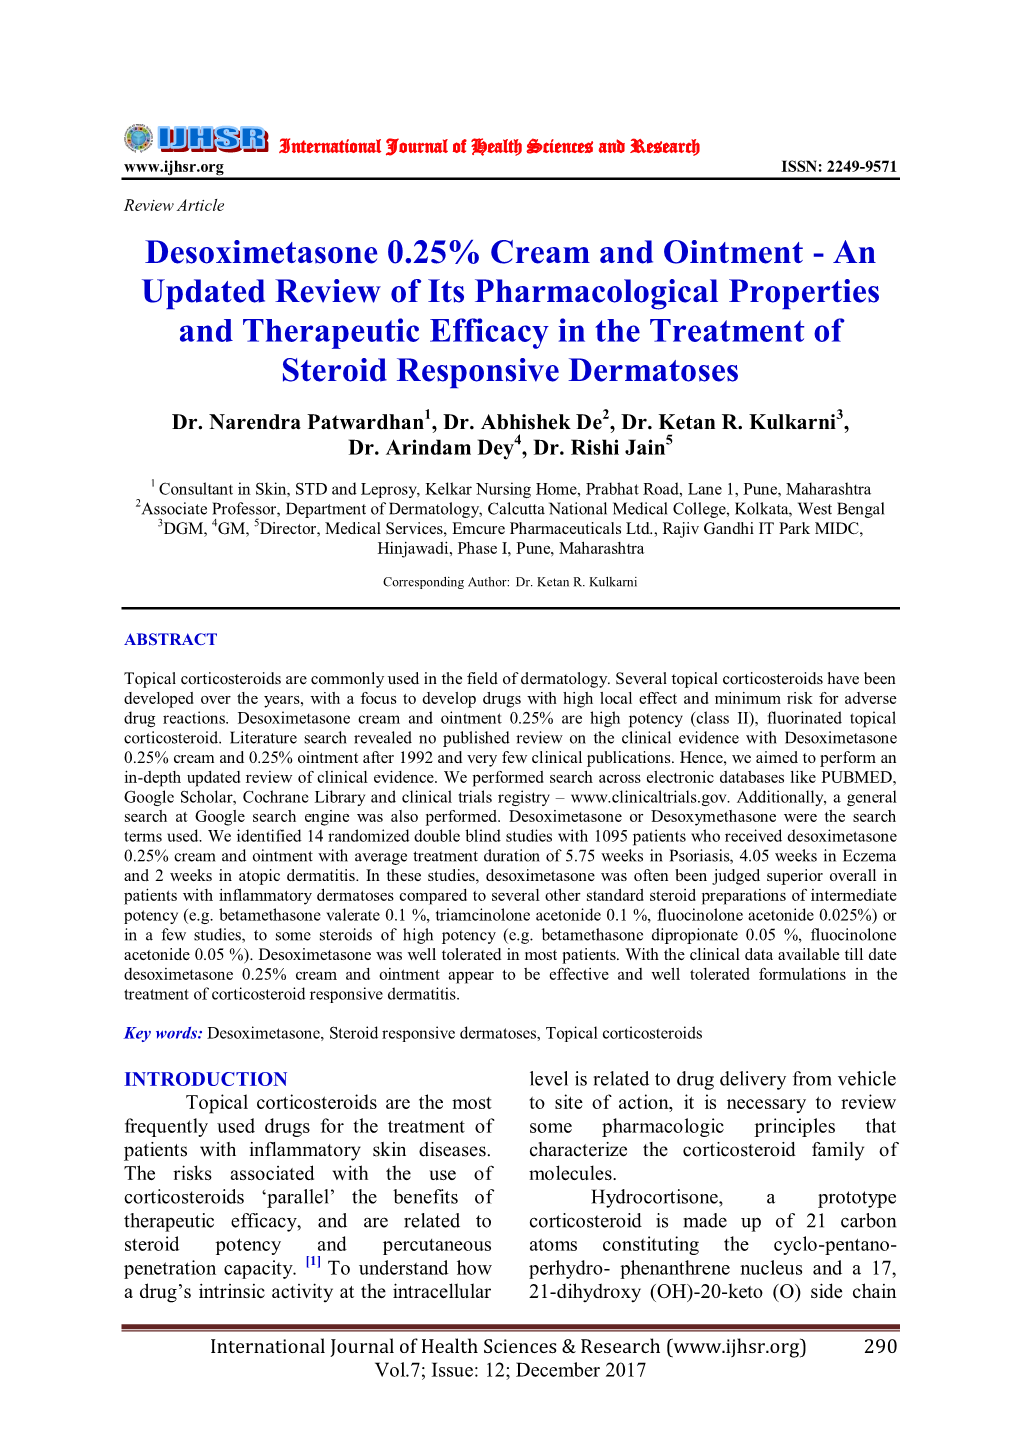 Desoximetasone 0.25% Cream and Ointment